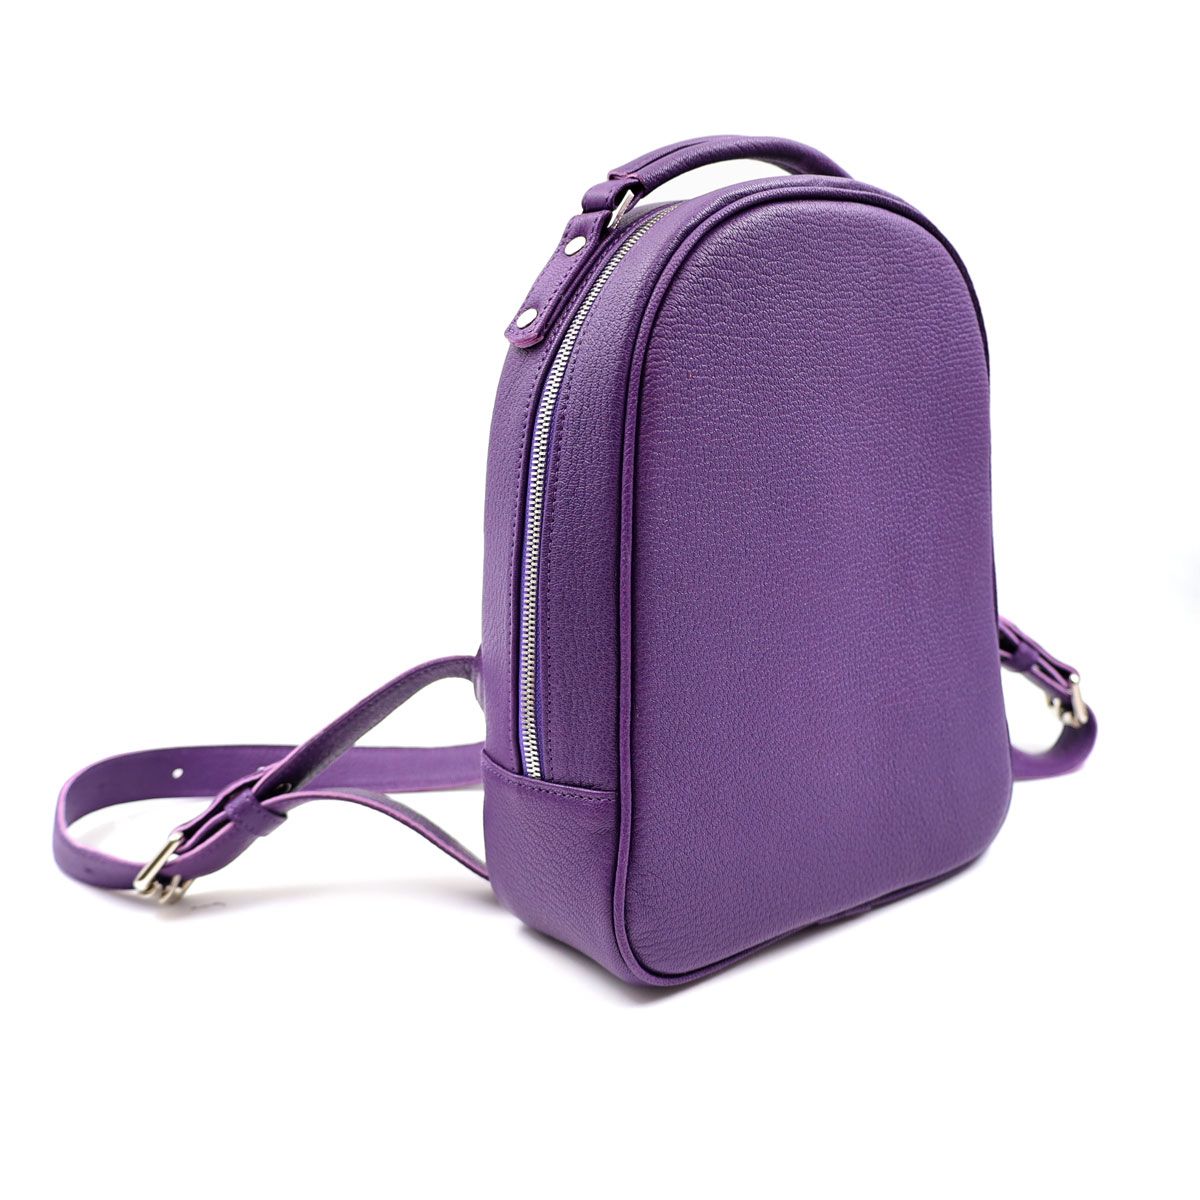 Рюкзак женский J. Audmorr Dee светло-фиолетовый, 28х22х9 см